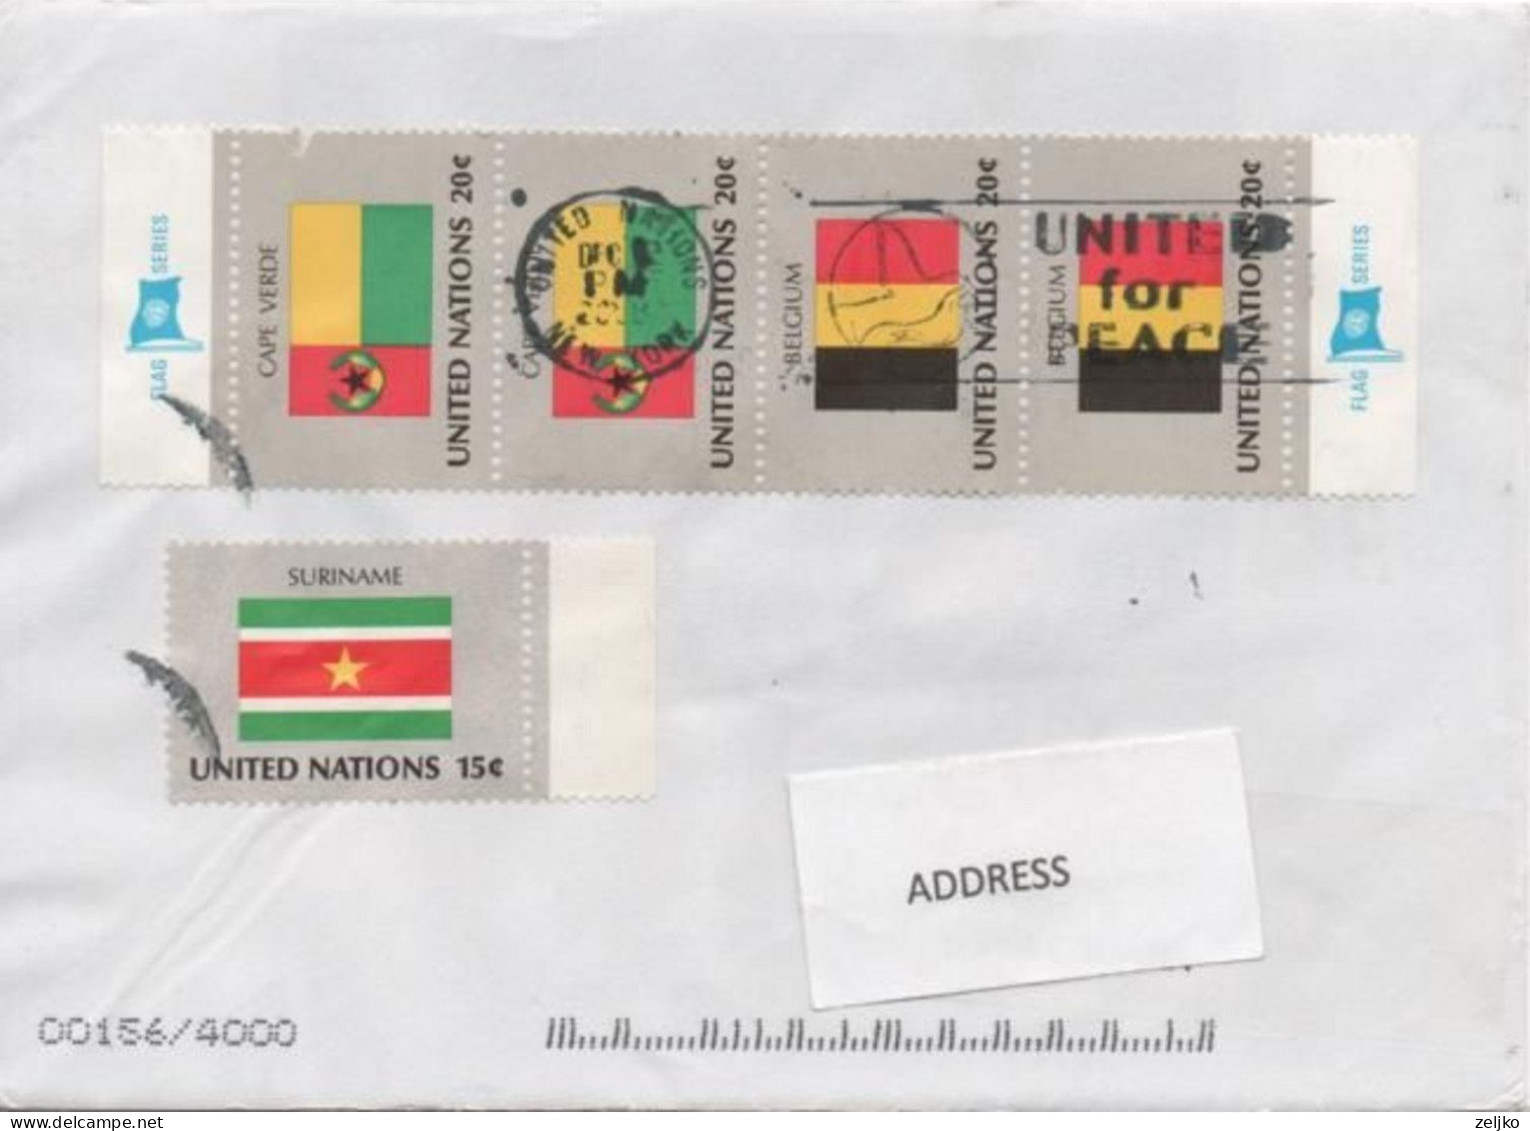 United Nations, UN, Flags Of Cape Verde, Belgium, Suriname - Covers & Documents